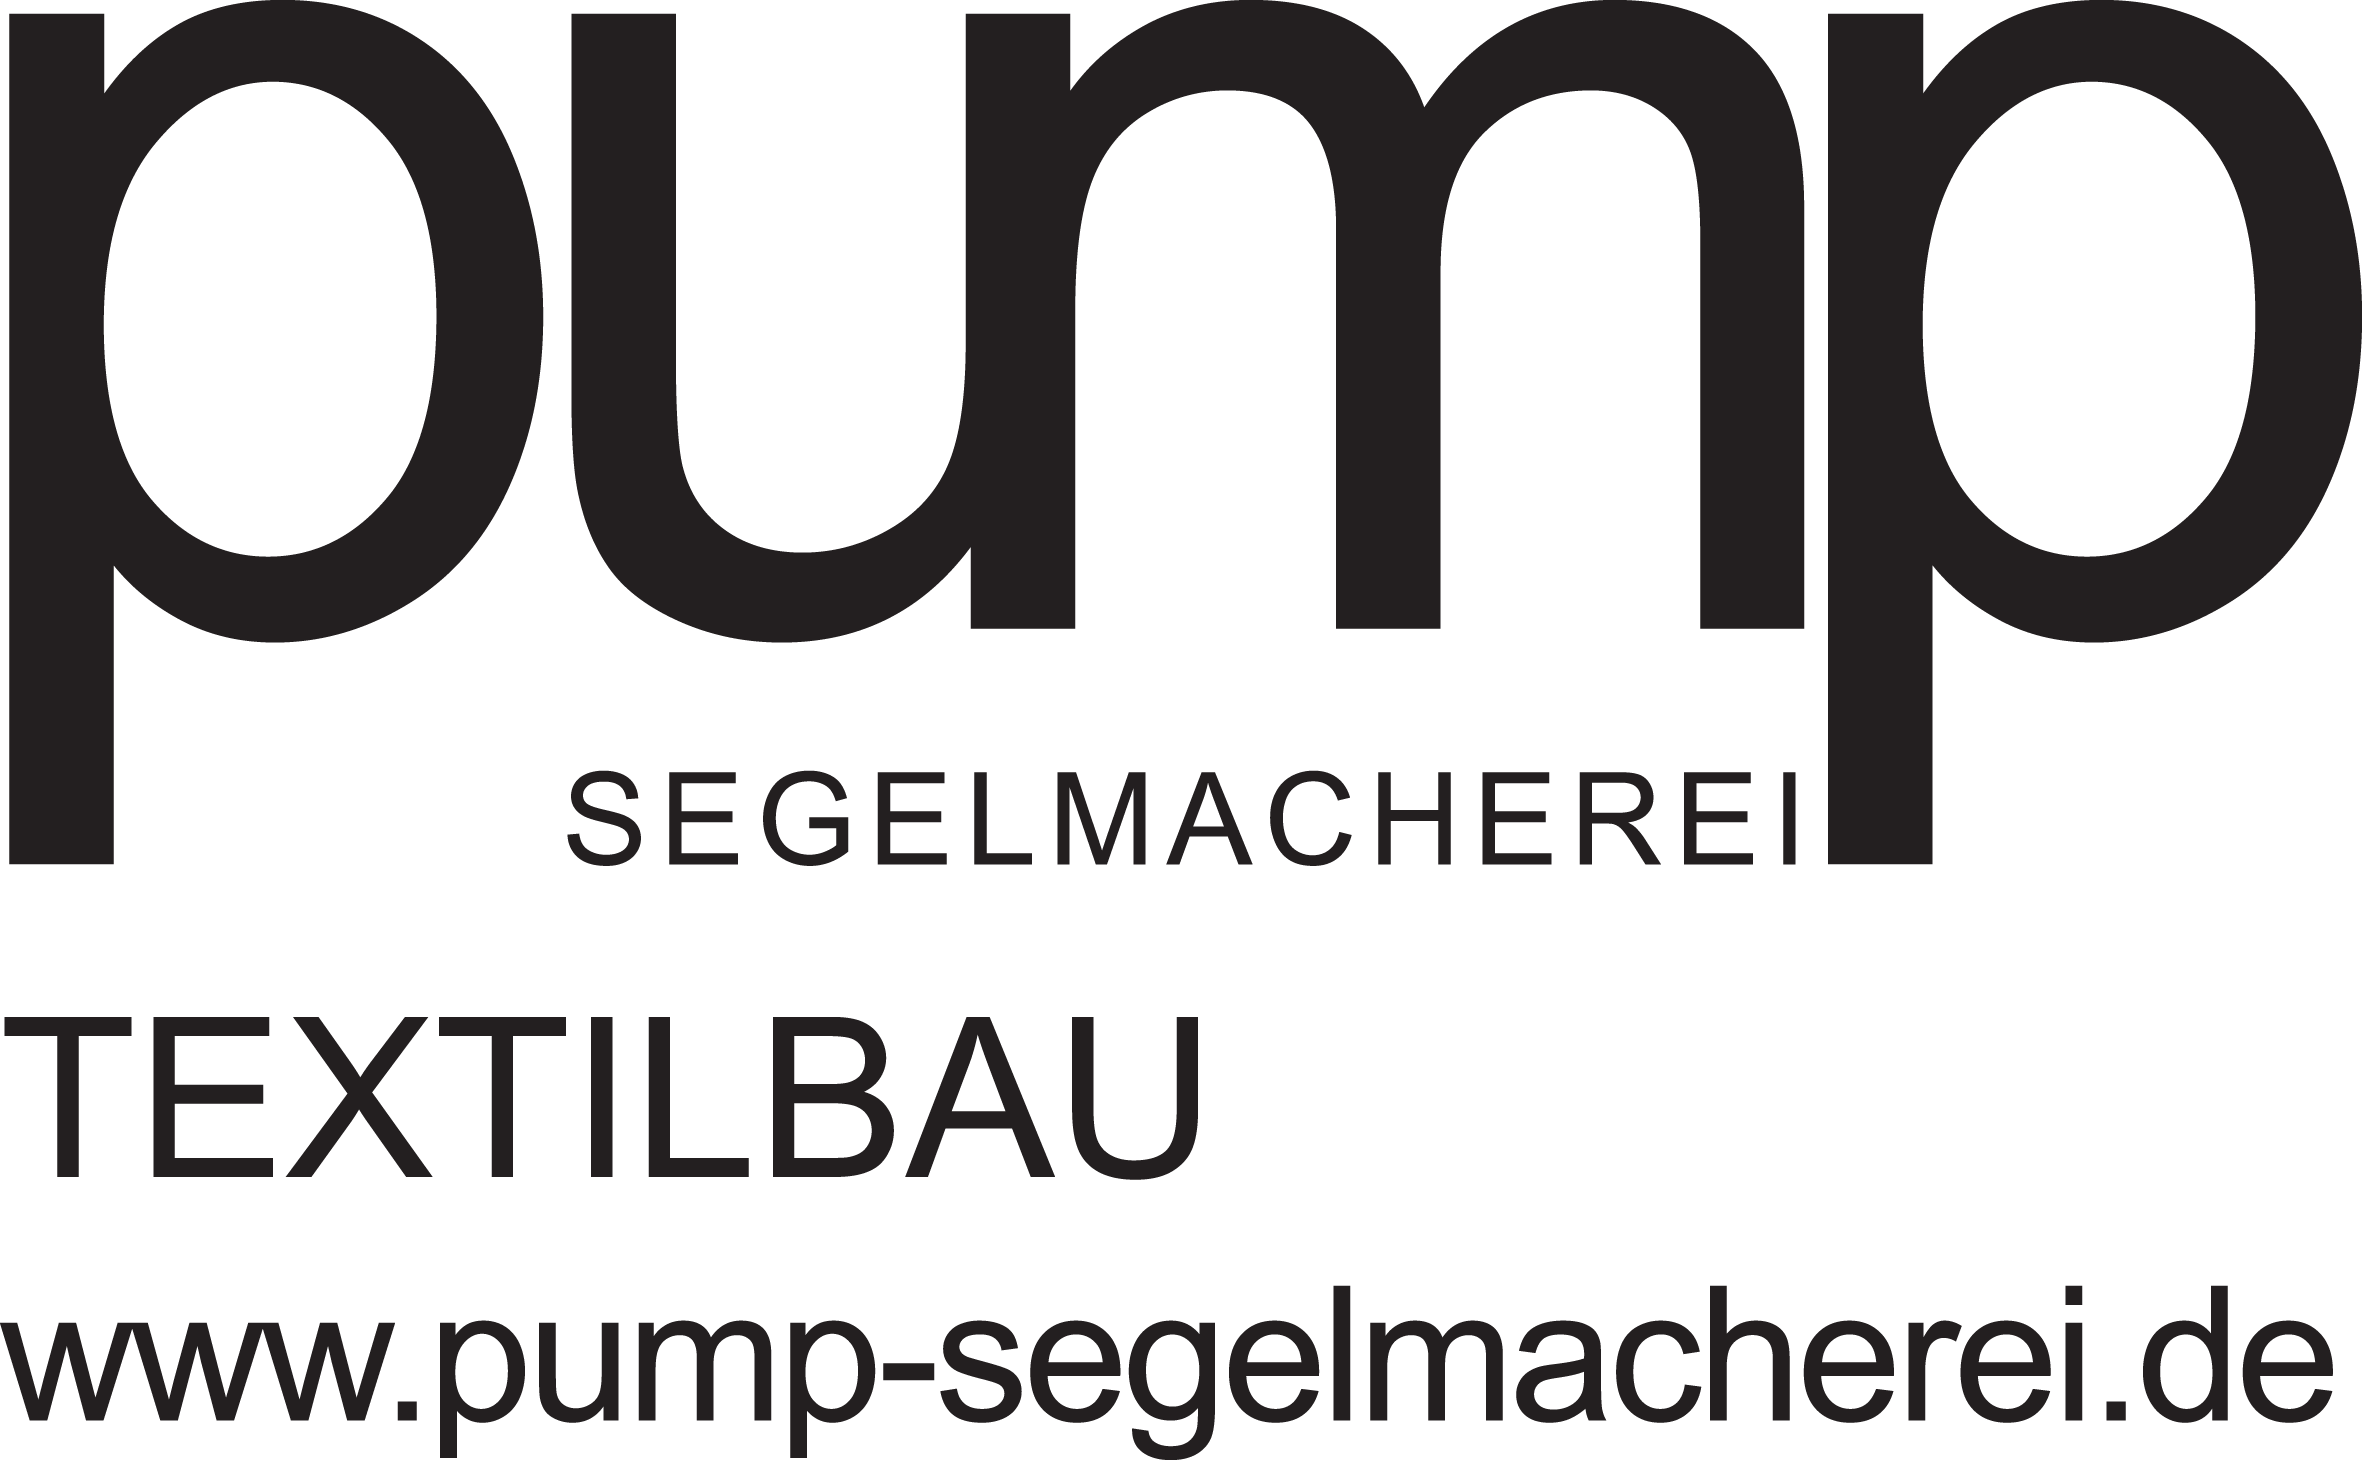 PUMP Segelmacherei Hamburg